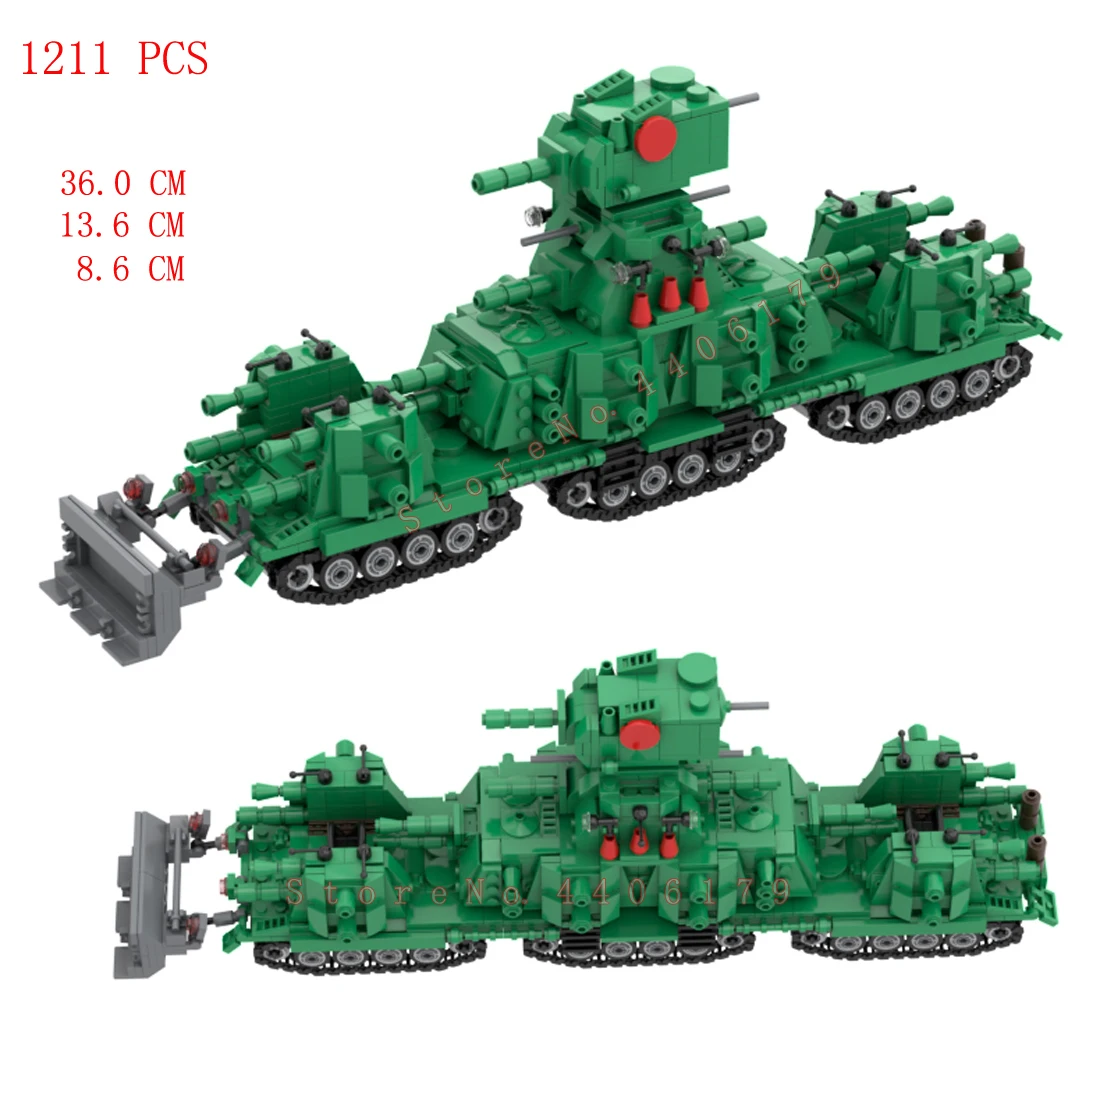 

hot military WWII Soviet Union Army KV-44 Heavy tank green vehicles war equipment weapons Building Blocks model bricks toys gift